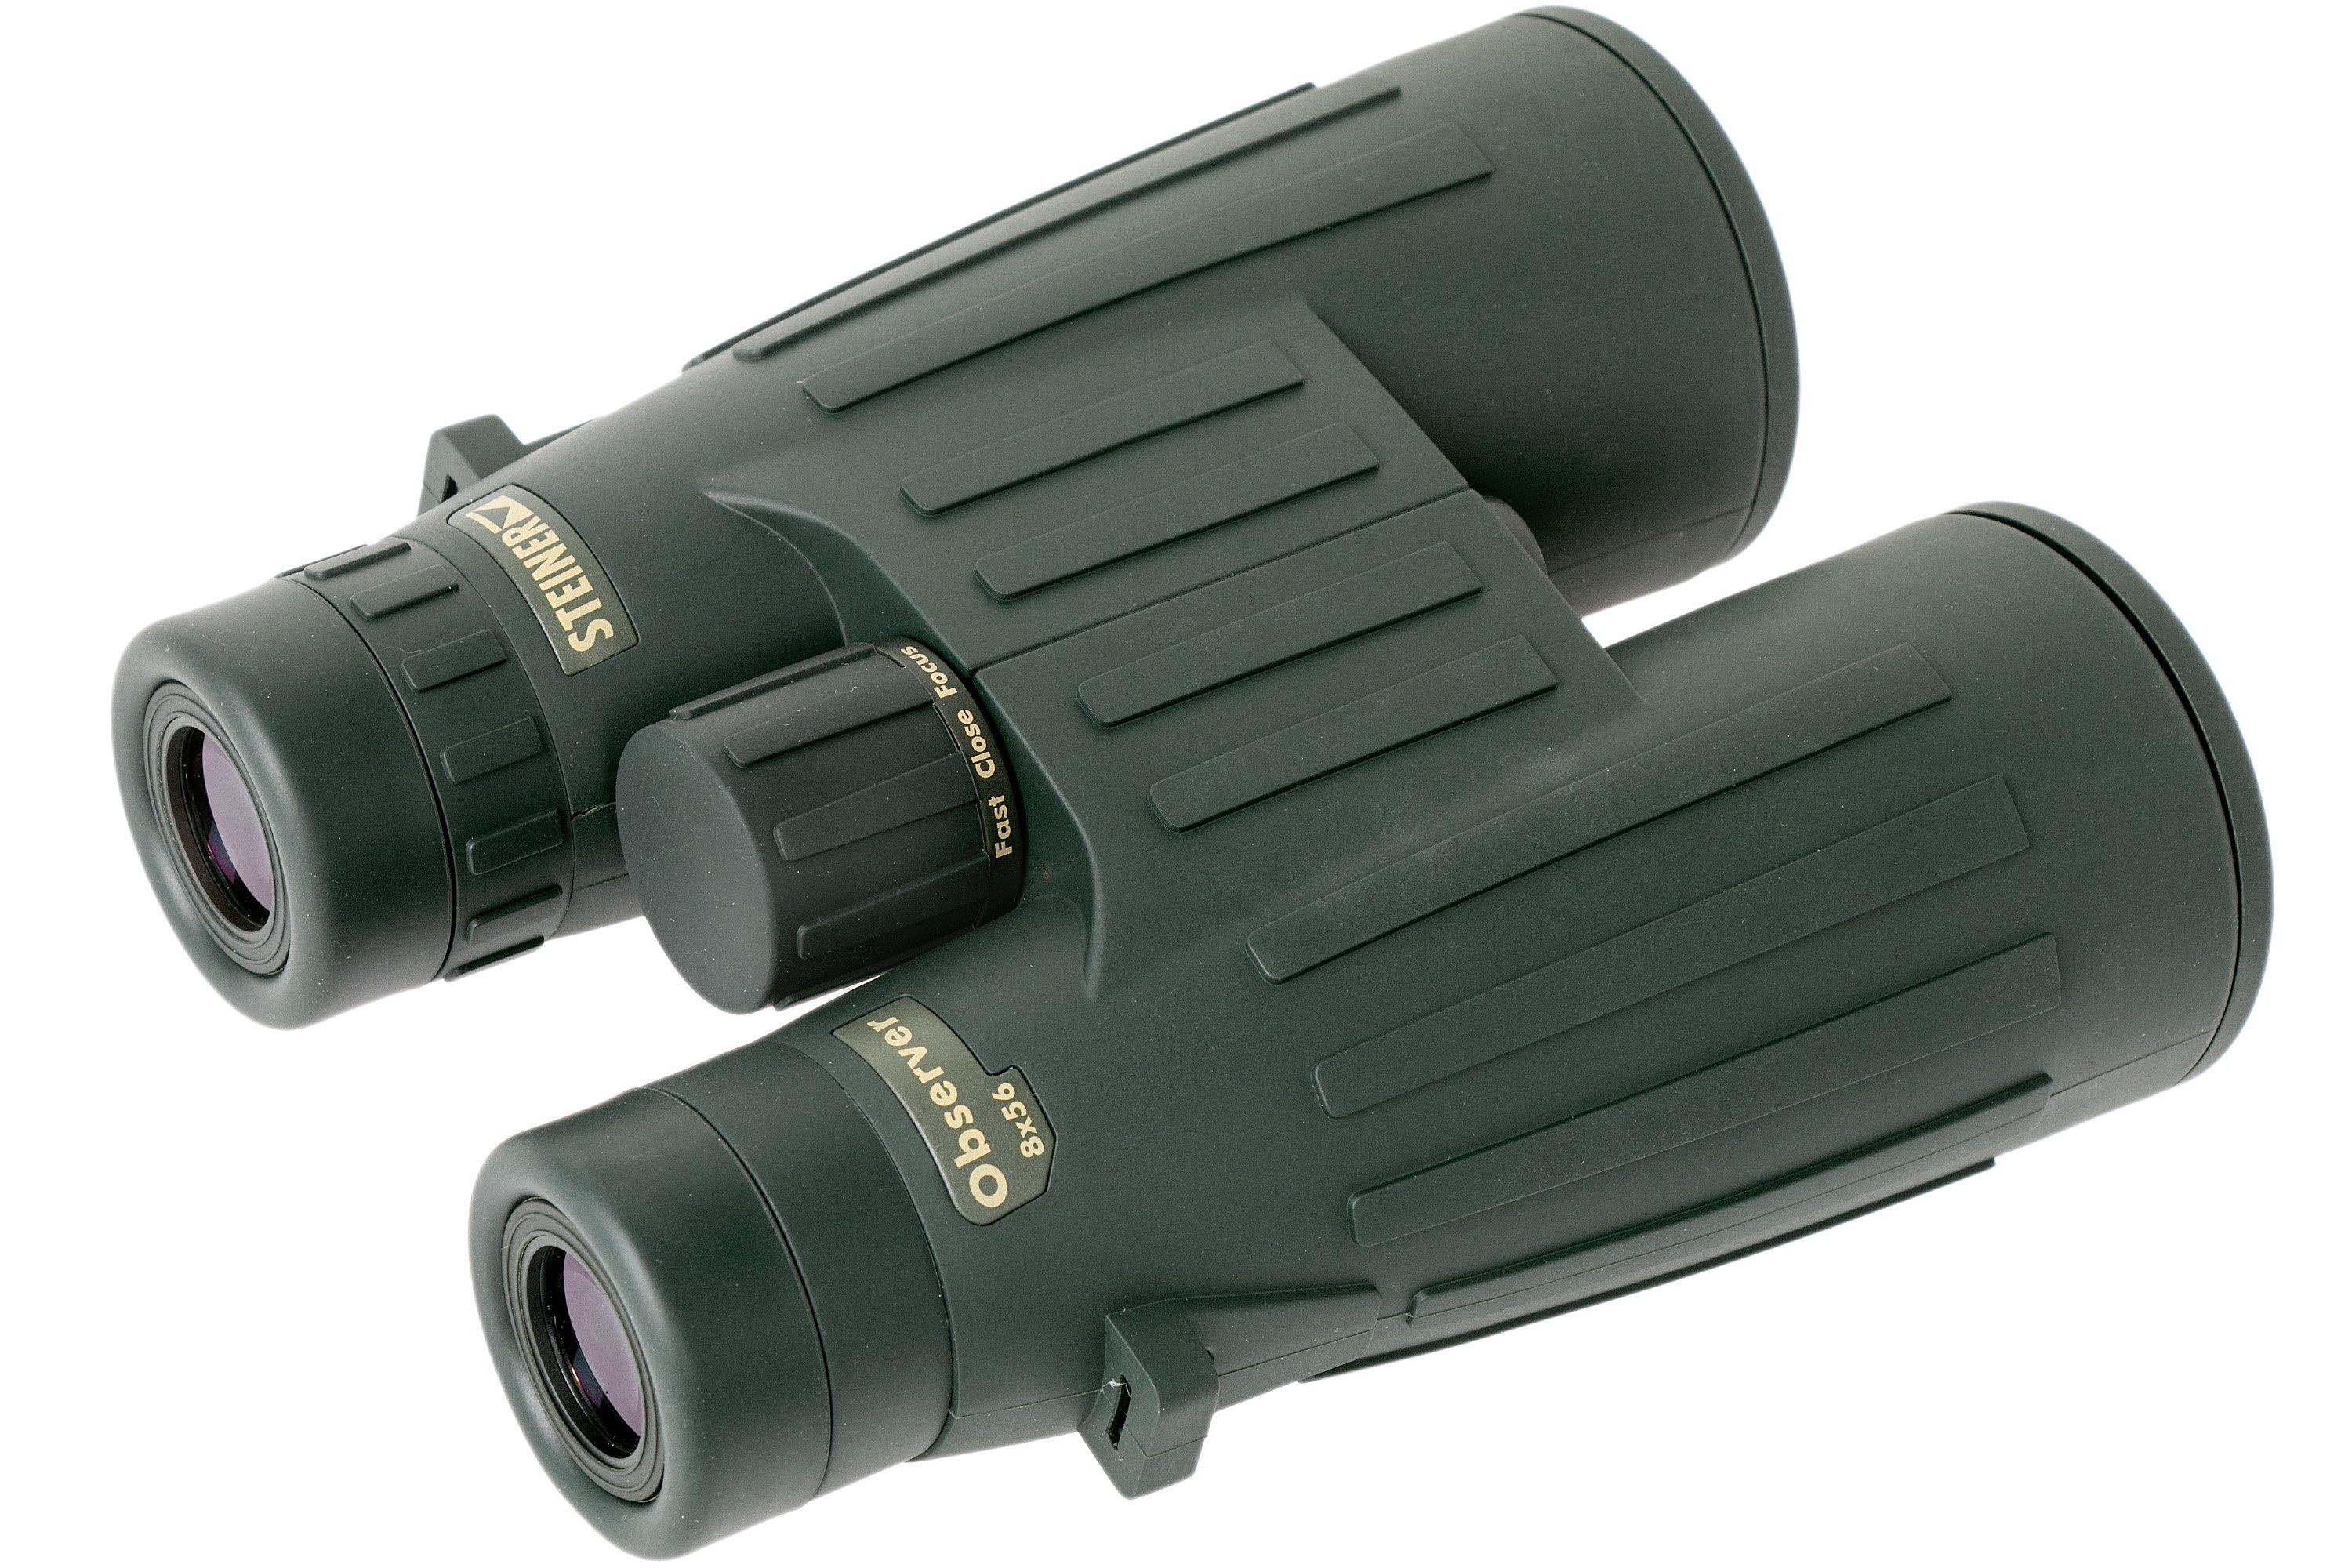 Steiner Observer 8x56 Binoculars Advantageously Shopping At